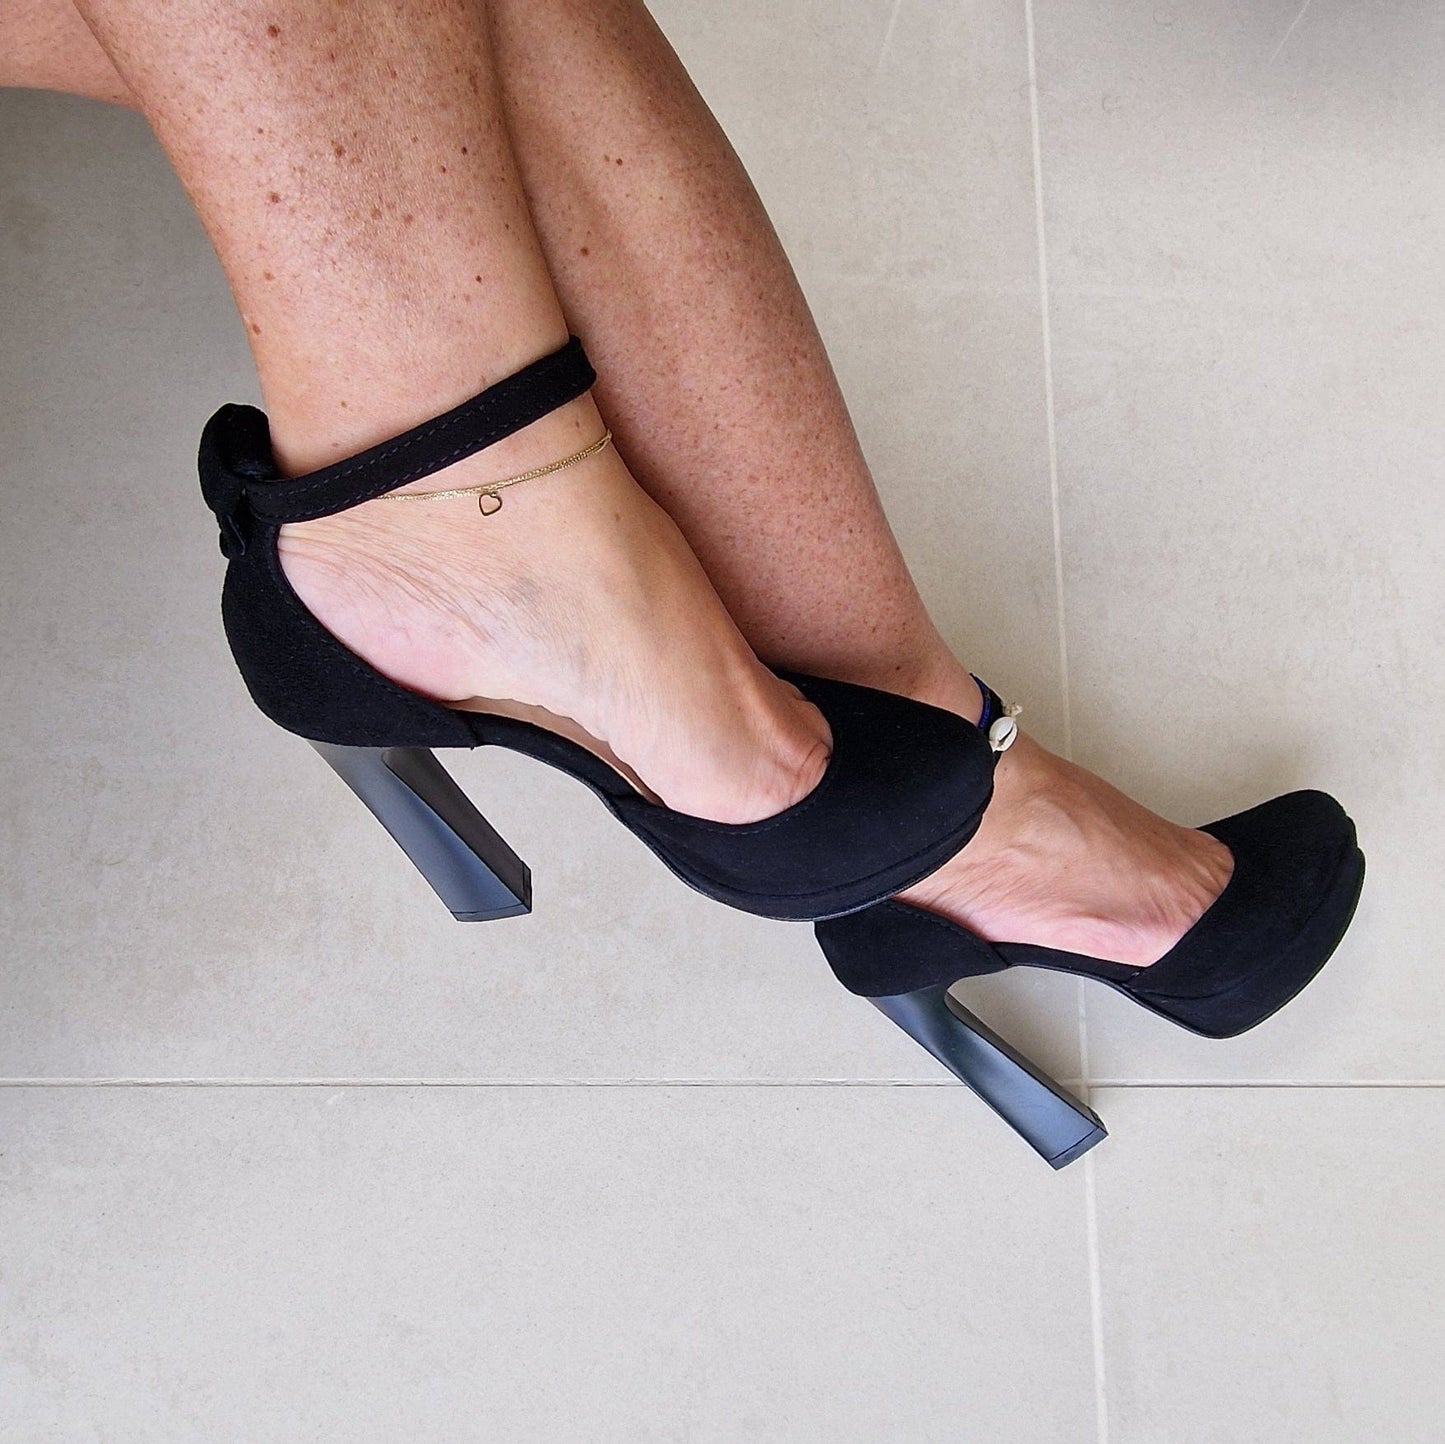 Almond toe high heeled platform shoes in black suede